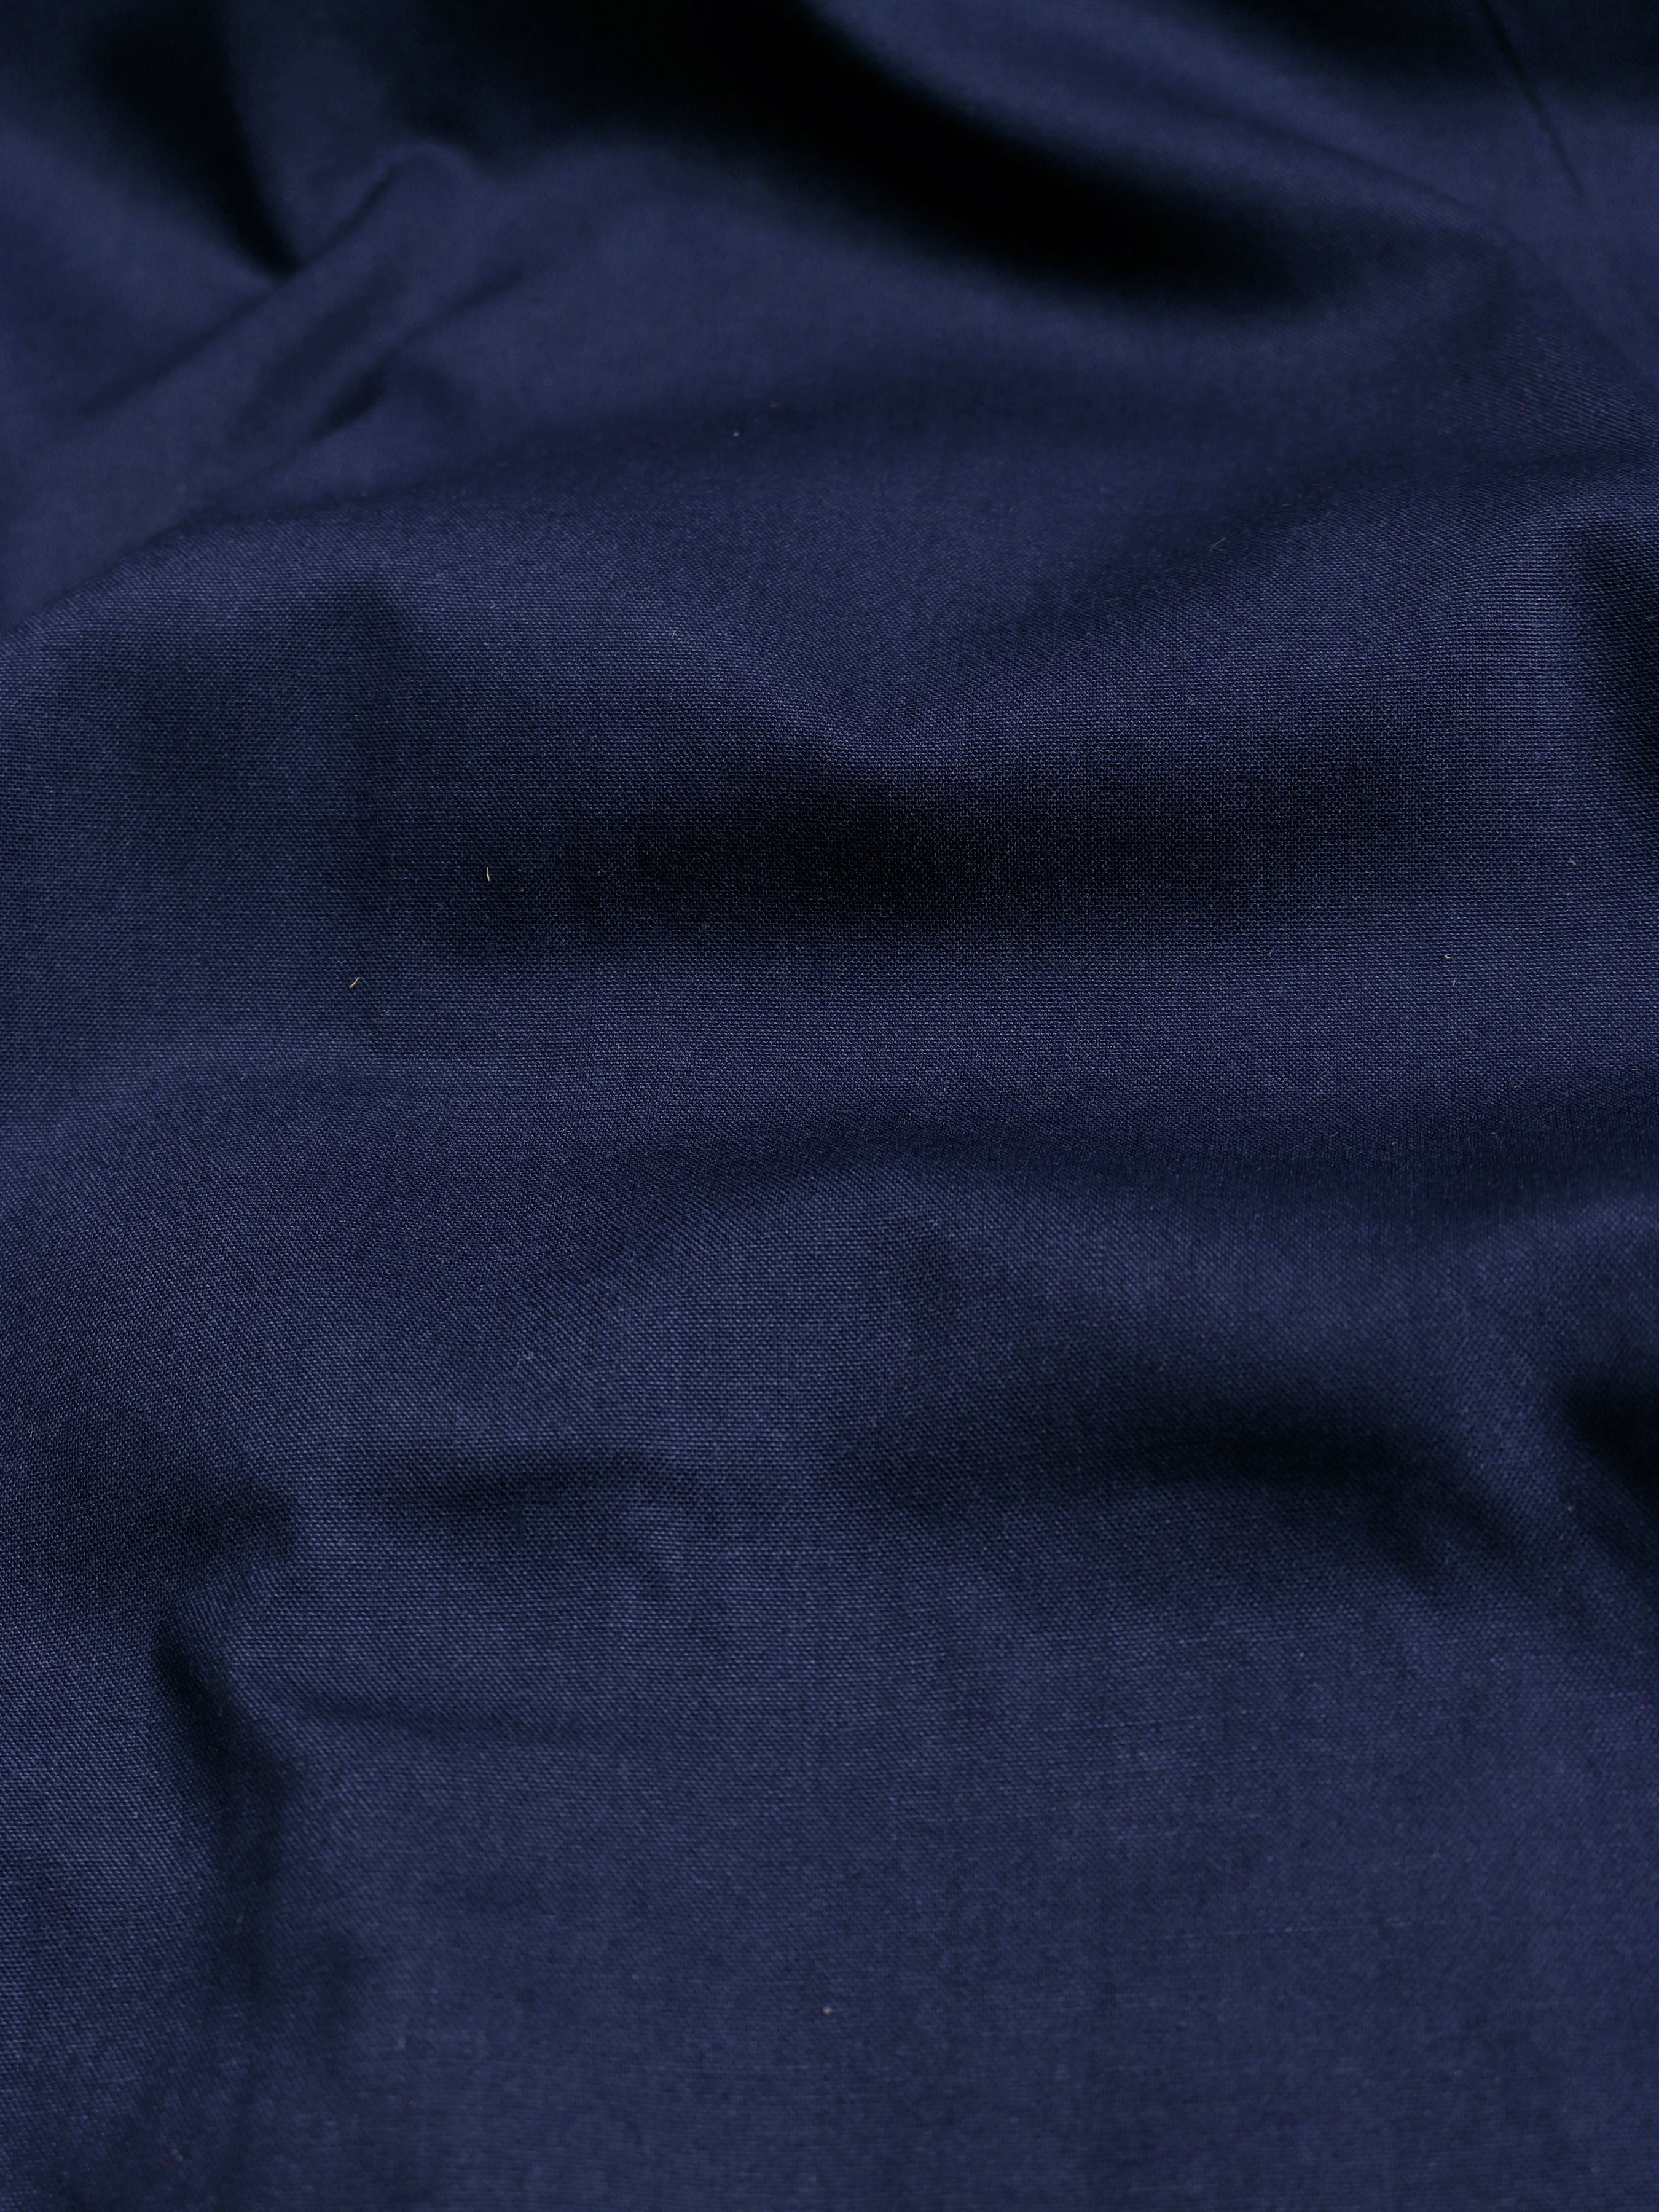 Blue super soft cotton shirt